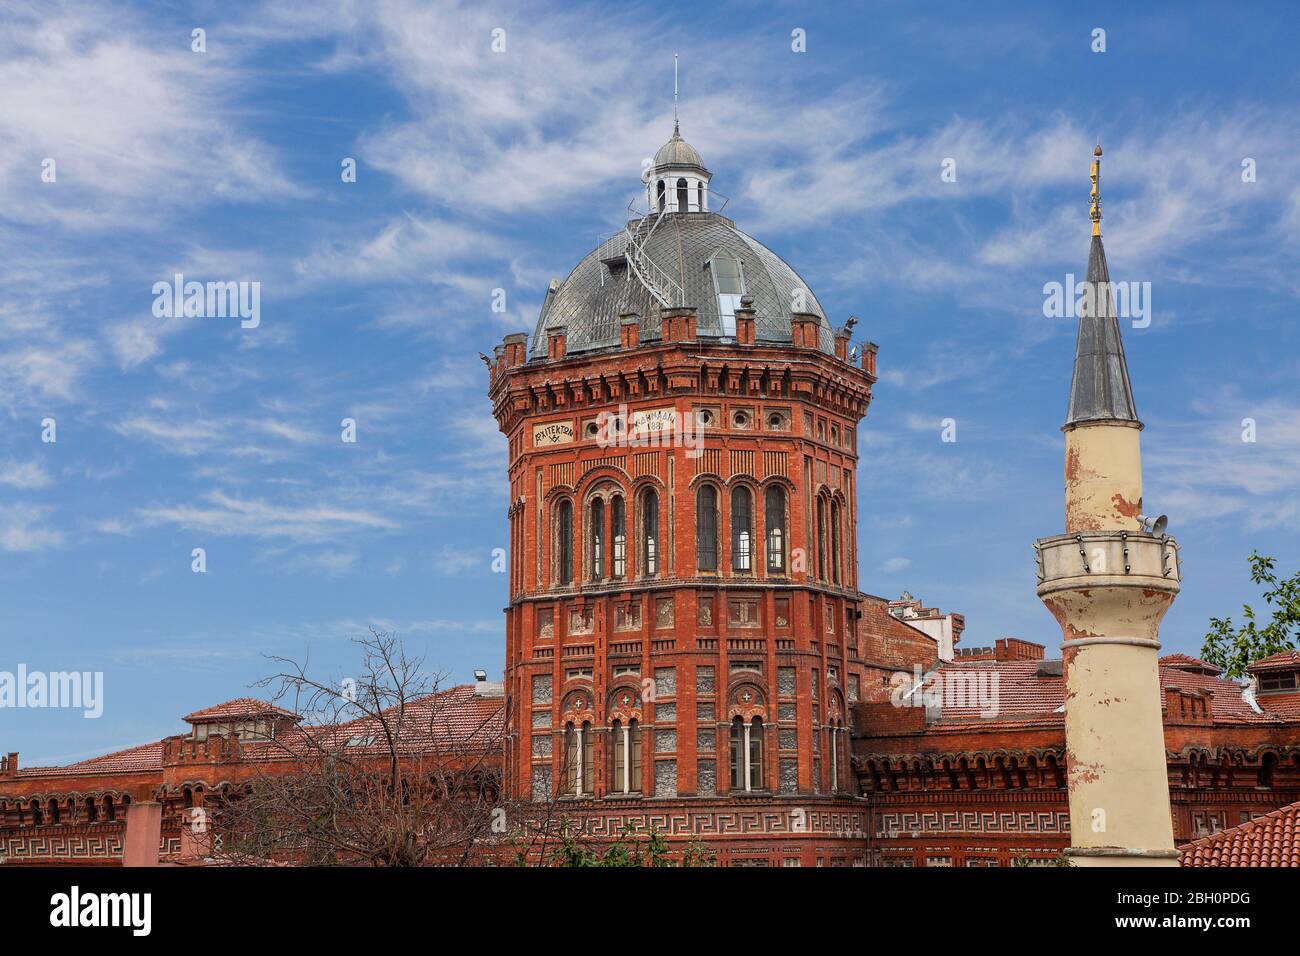 Dome of Fener Greek Orthodox School and minaret, in Fener, Istanbul, Turkey Stock Photo